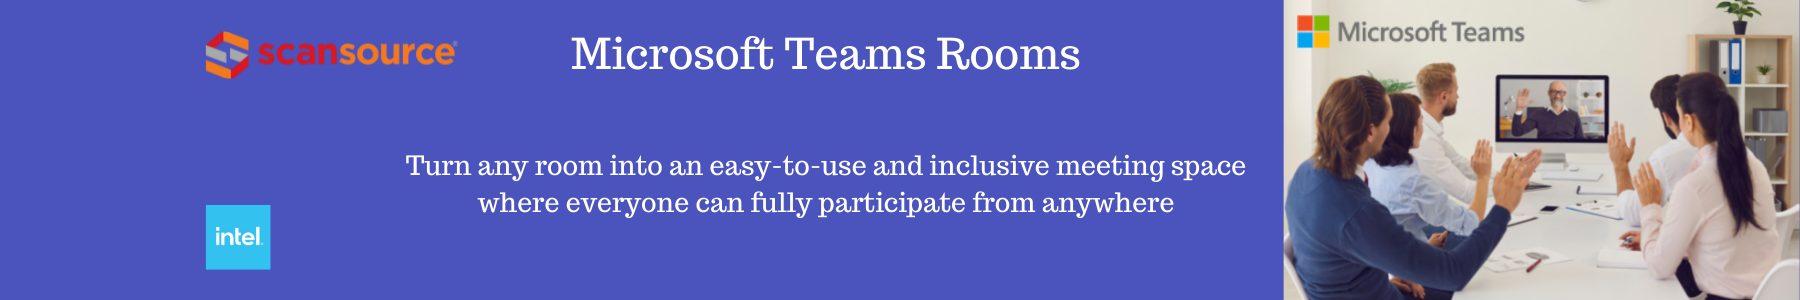 microsoft-teams-rooms-banner3